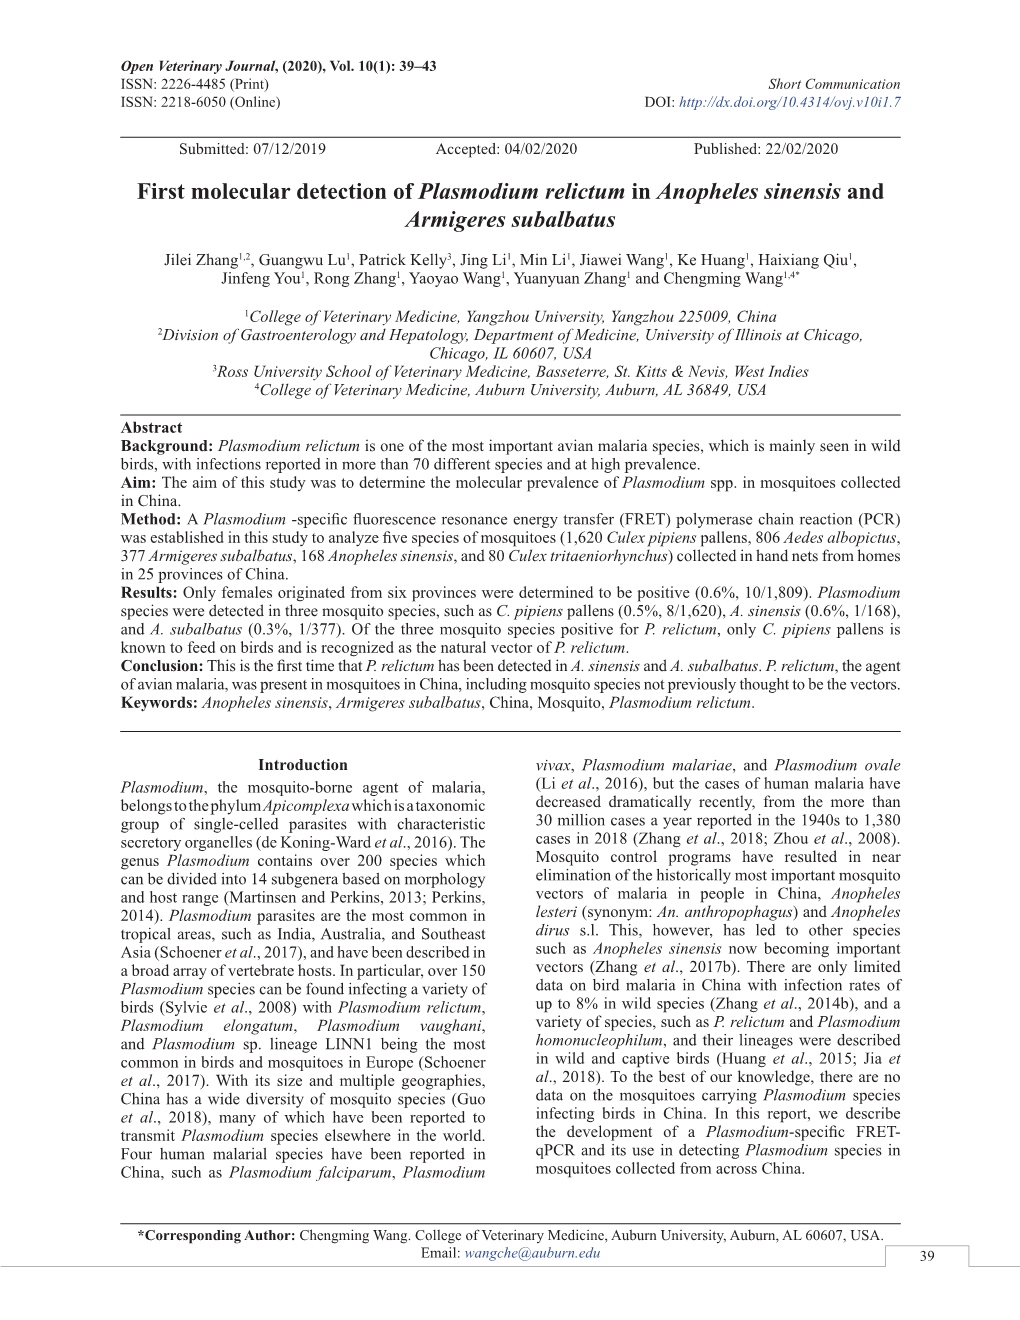 First Molecular Detection of Plasmodium Relictum in Anopheles Sinensis and Armigeres Subalbatus